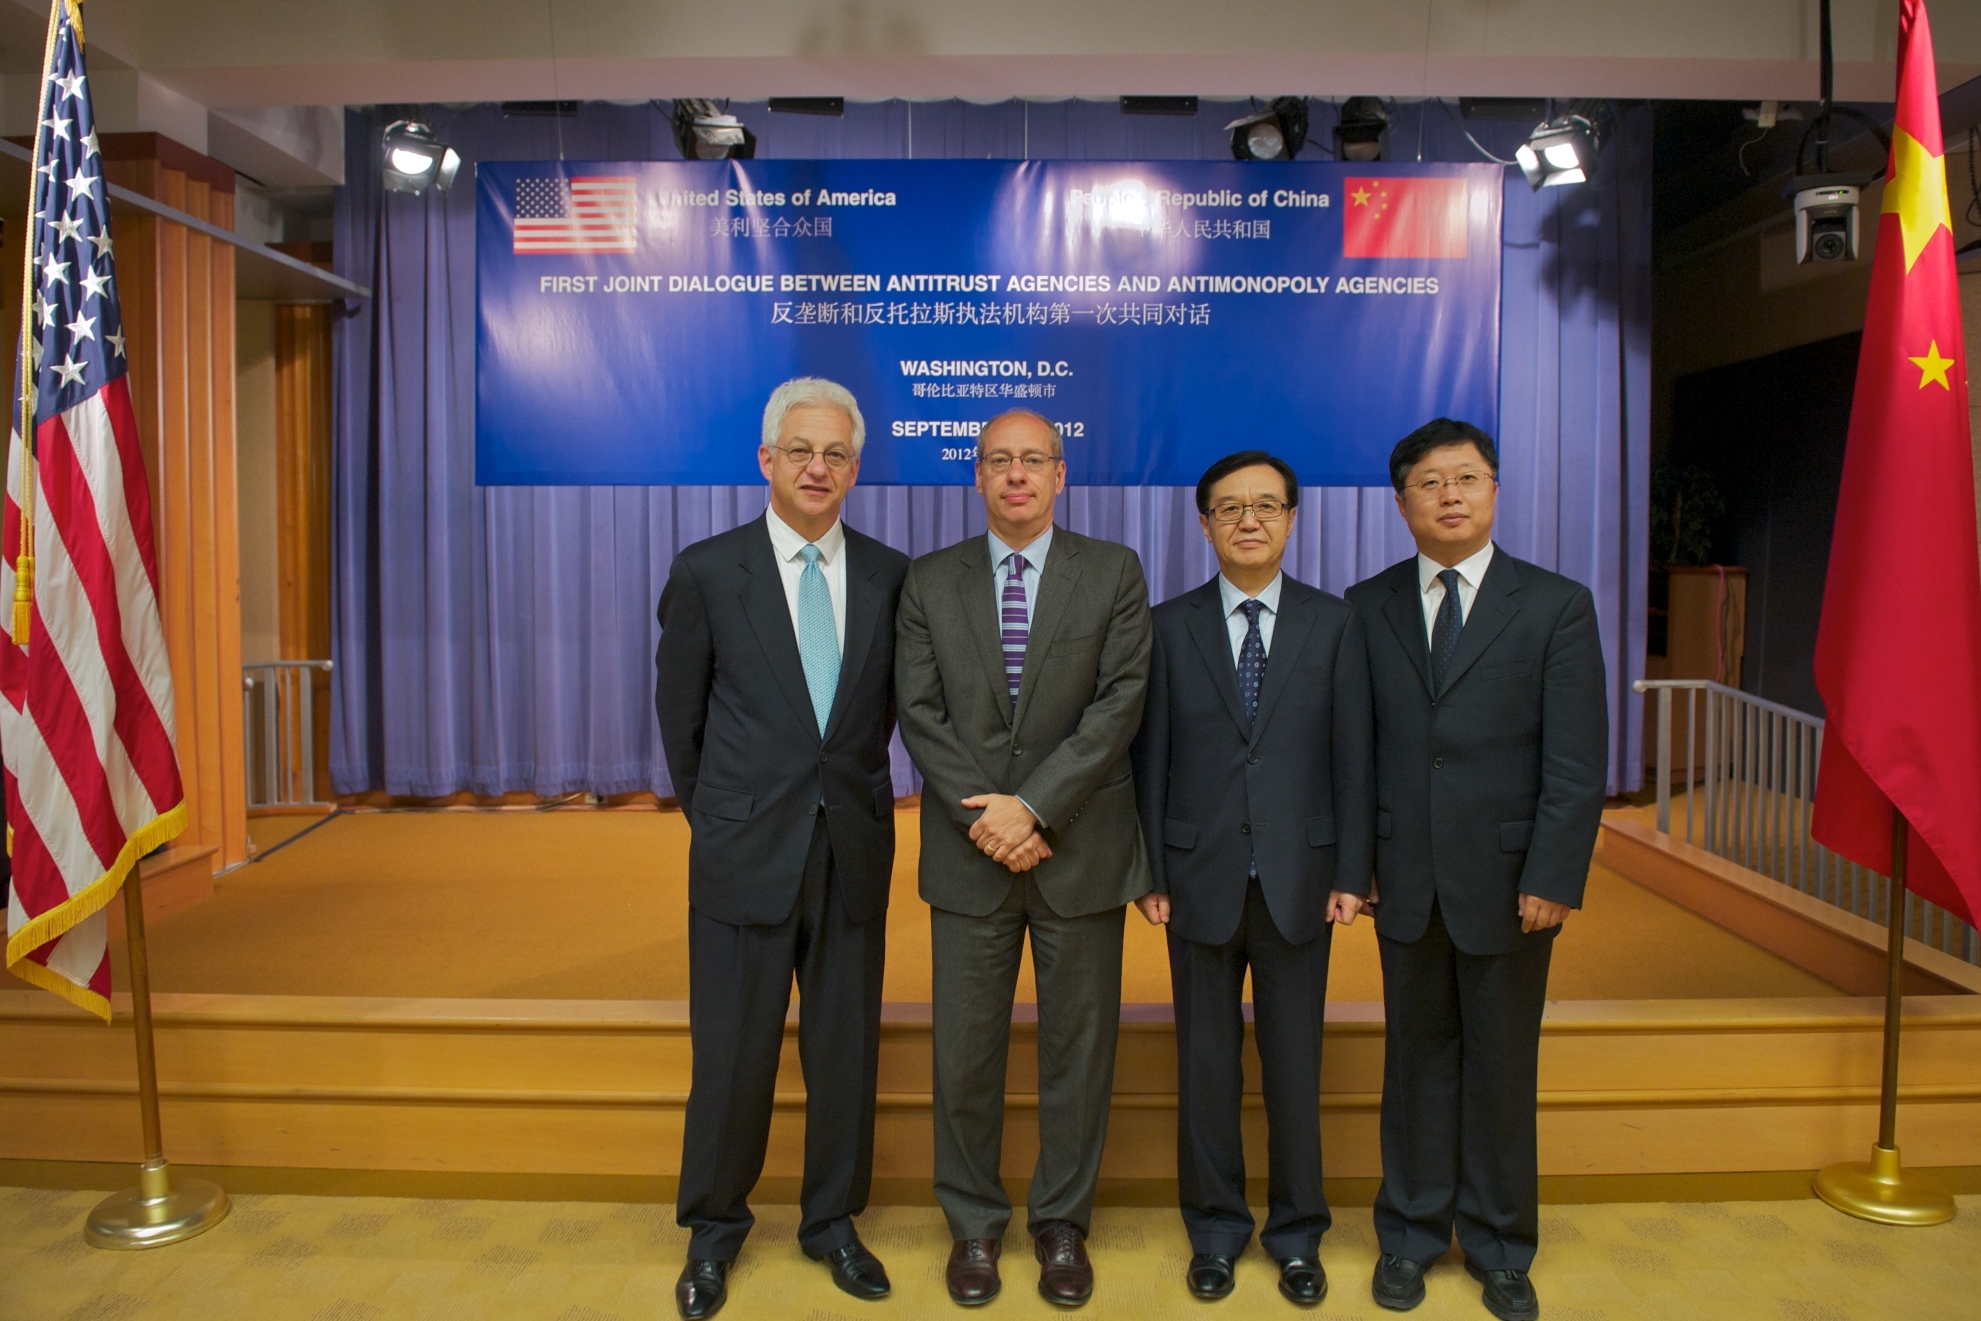 AAG (A) for ATR Wayland and FTC Chairman Jon Leibowitz with MOFCOM Vice Minister Gao Hucheng and SAIC Vice Minister Teng Jiacai